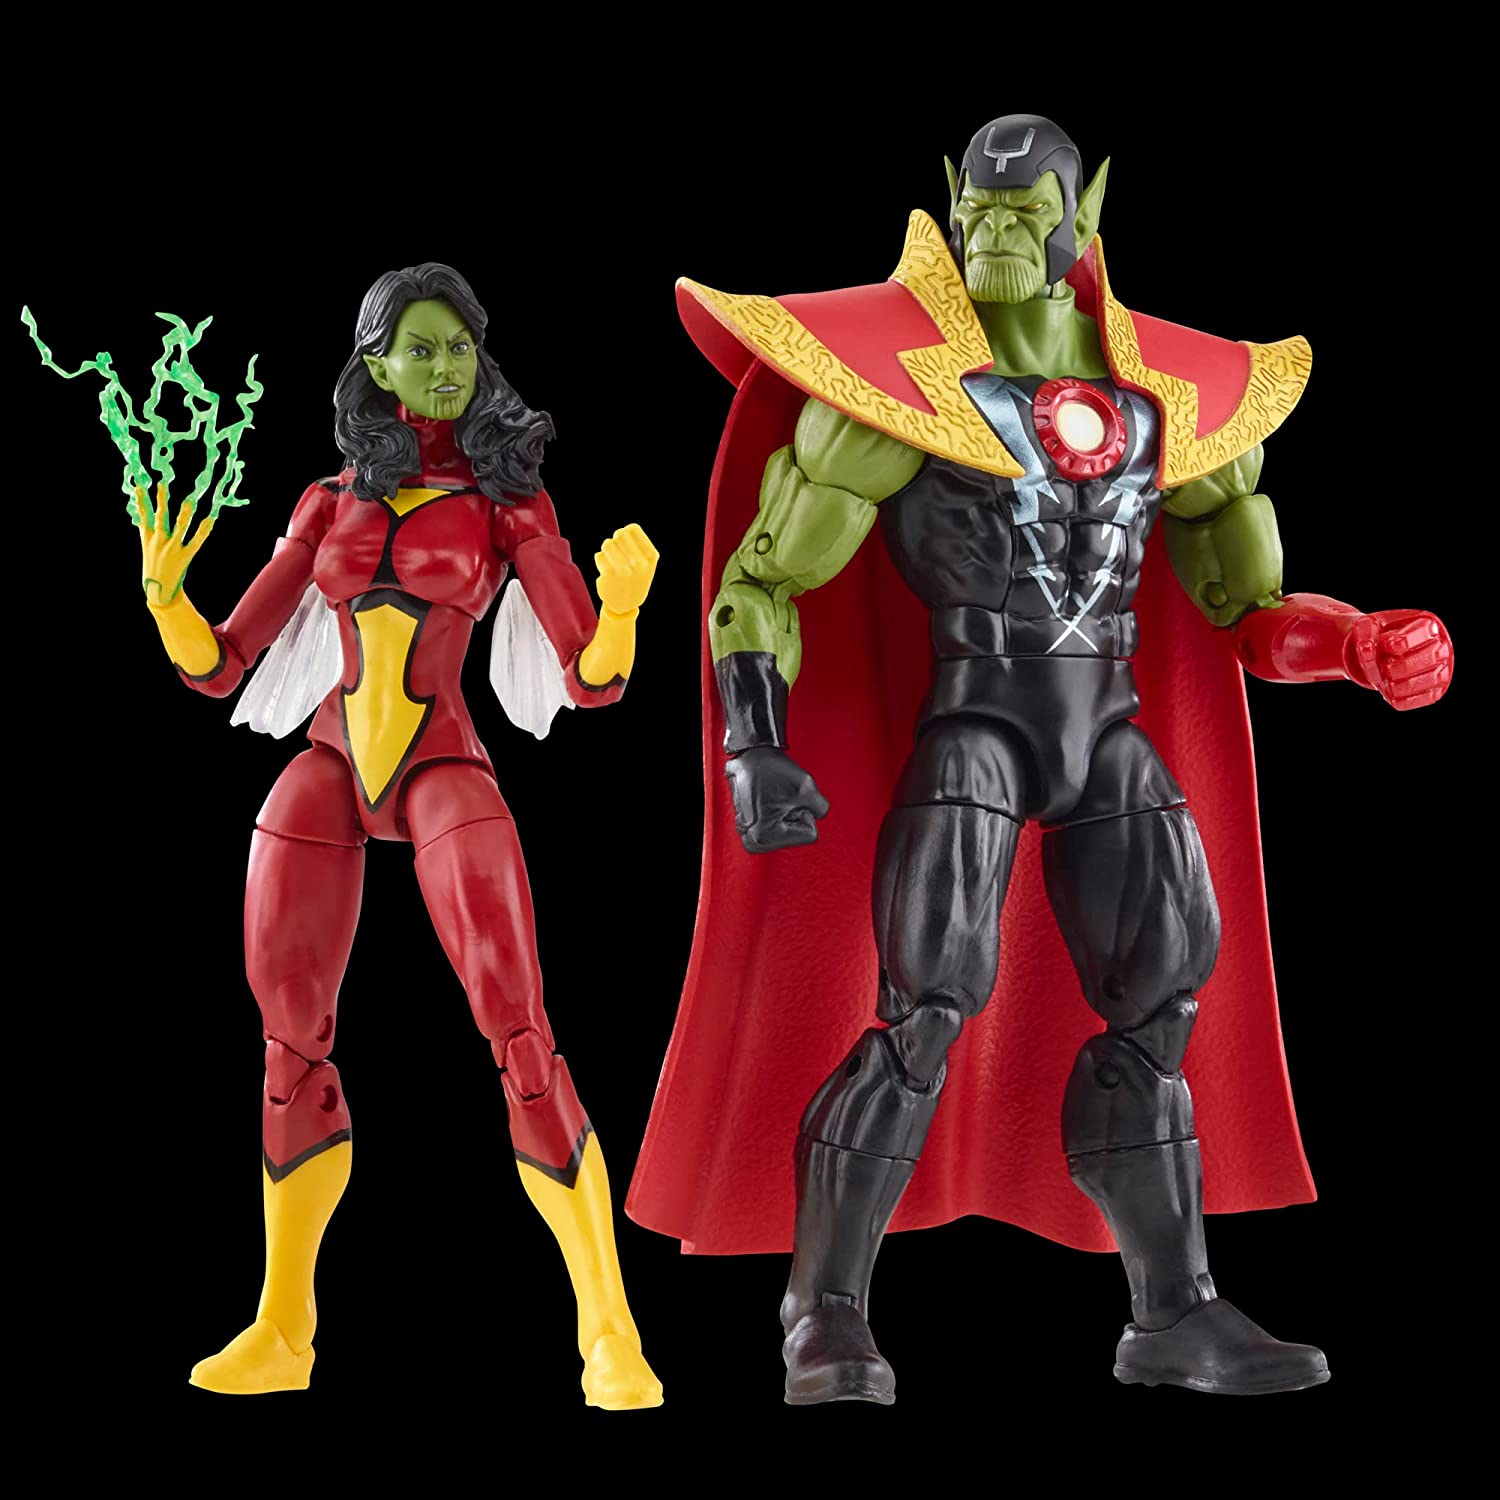 Marvel Legends: Skrull Queen and Super Skrull 2-pack revealed